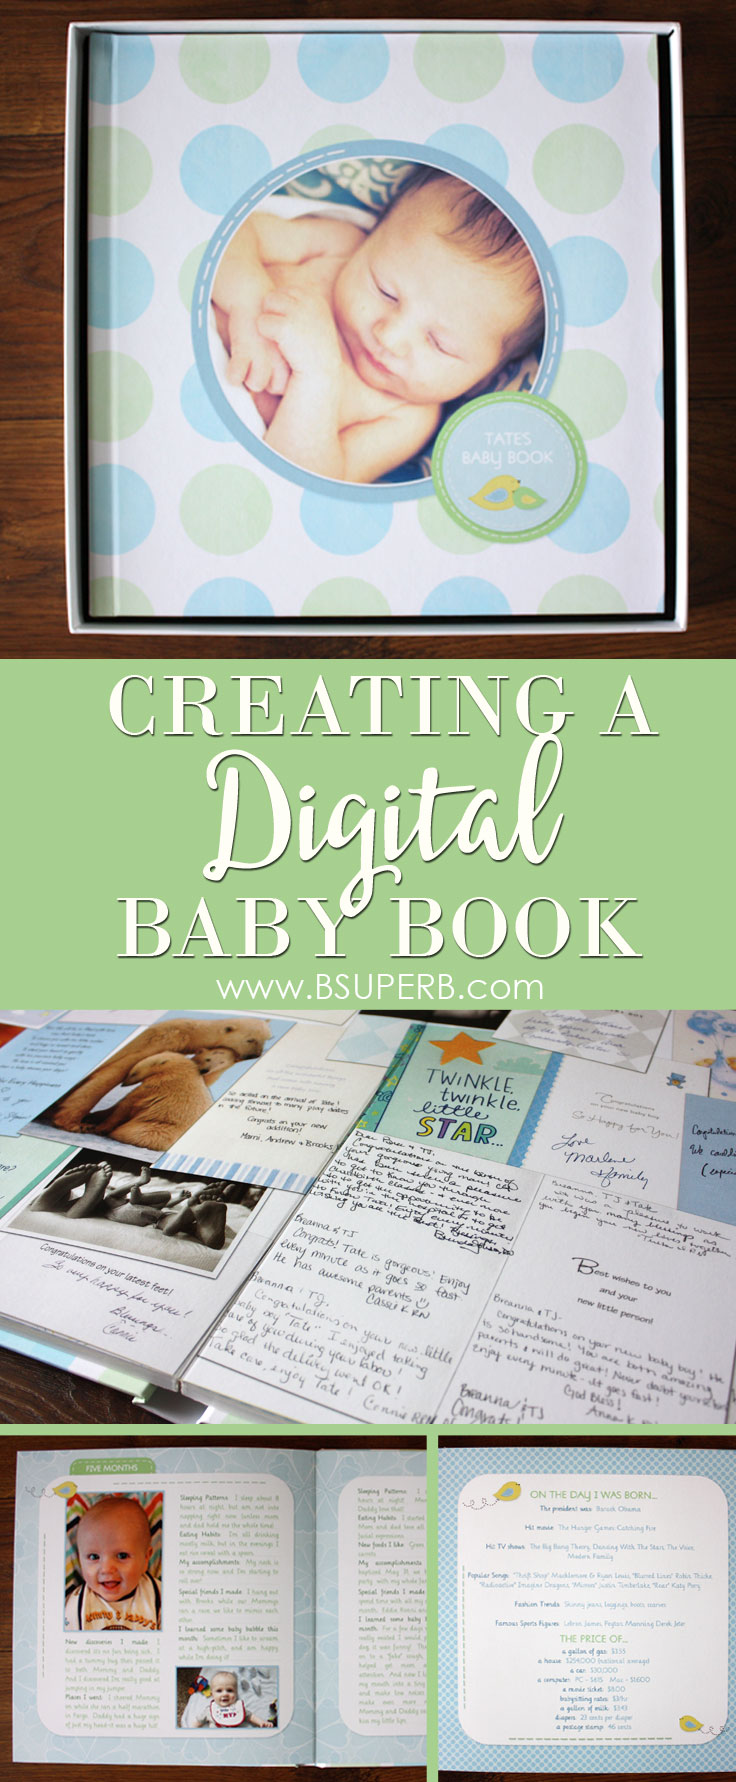 Create a Digital Baby Book - Tips & Ideas